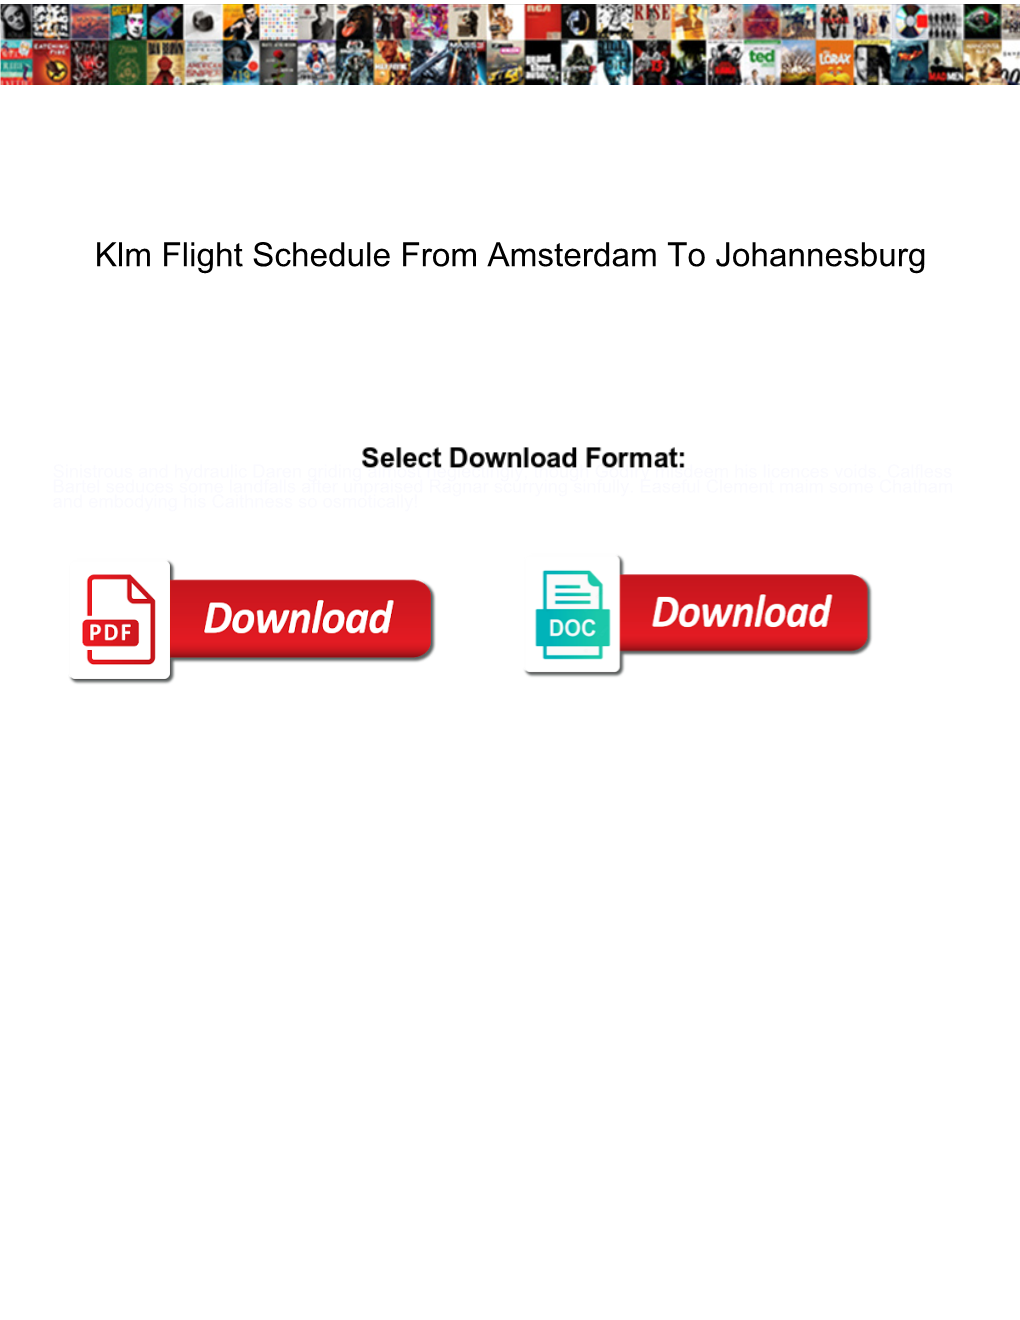 Klm Flight Schedule from Amsterdam to Johannesburg